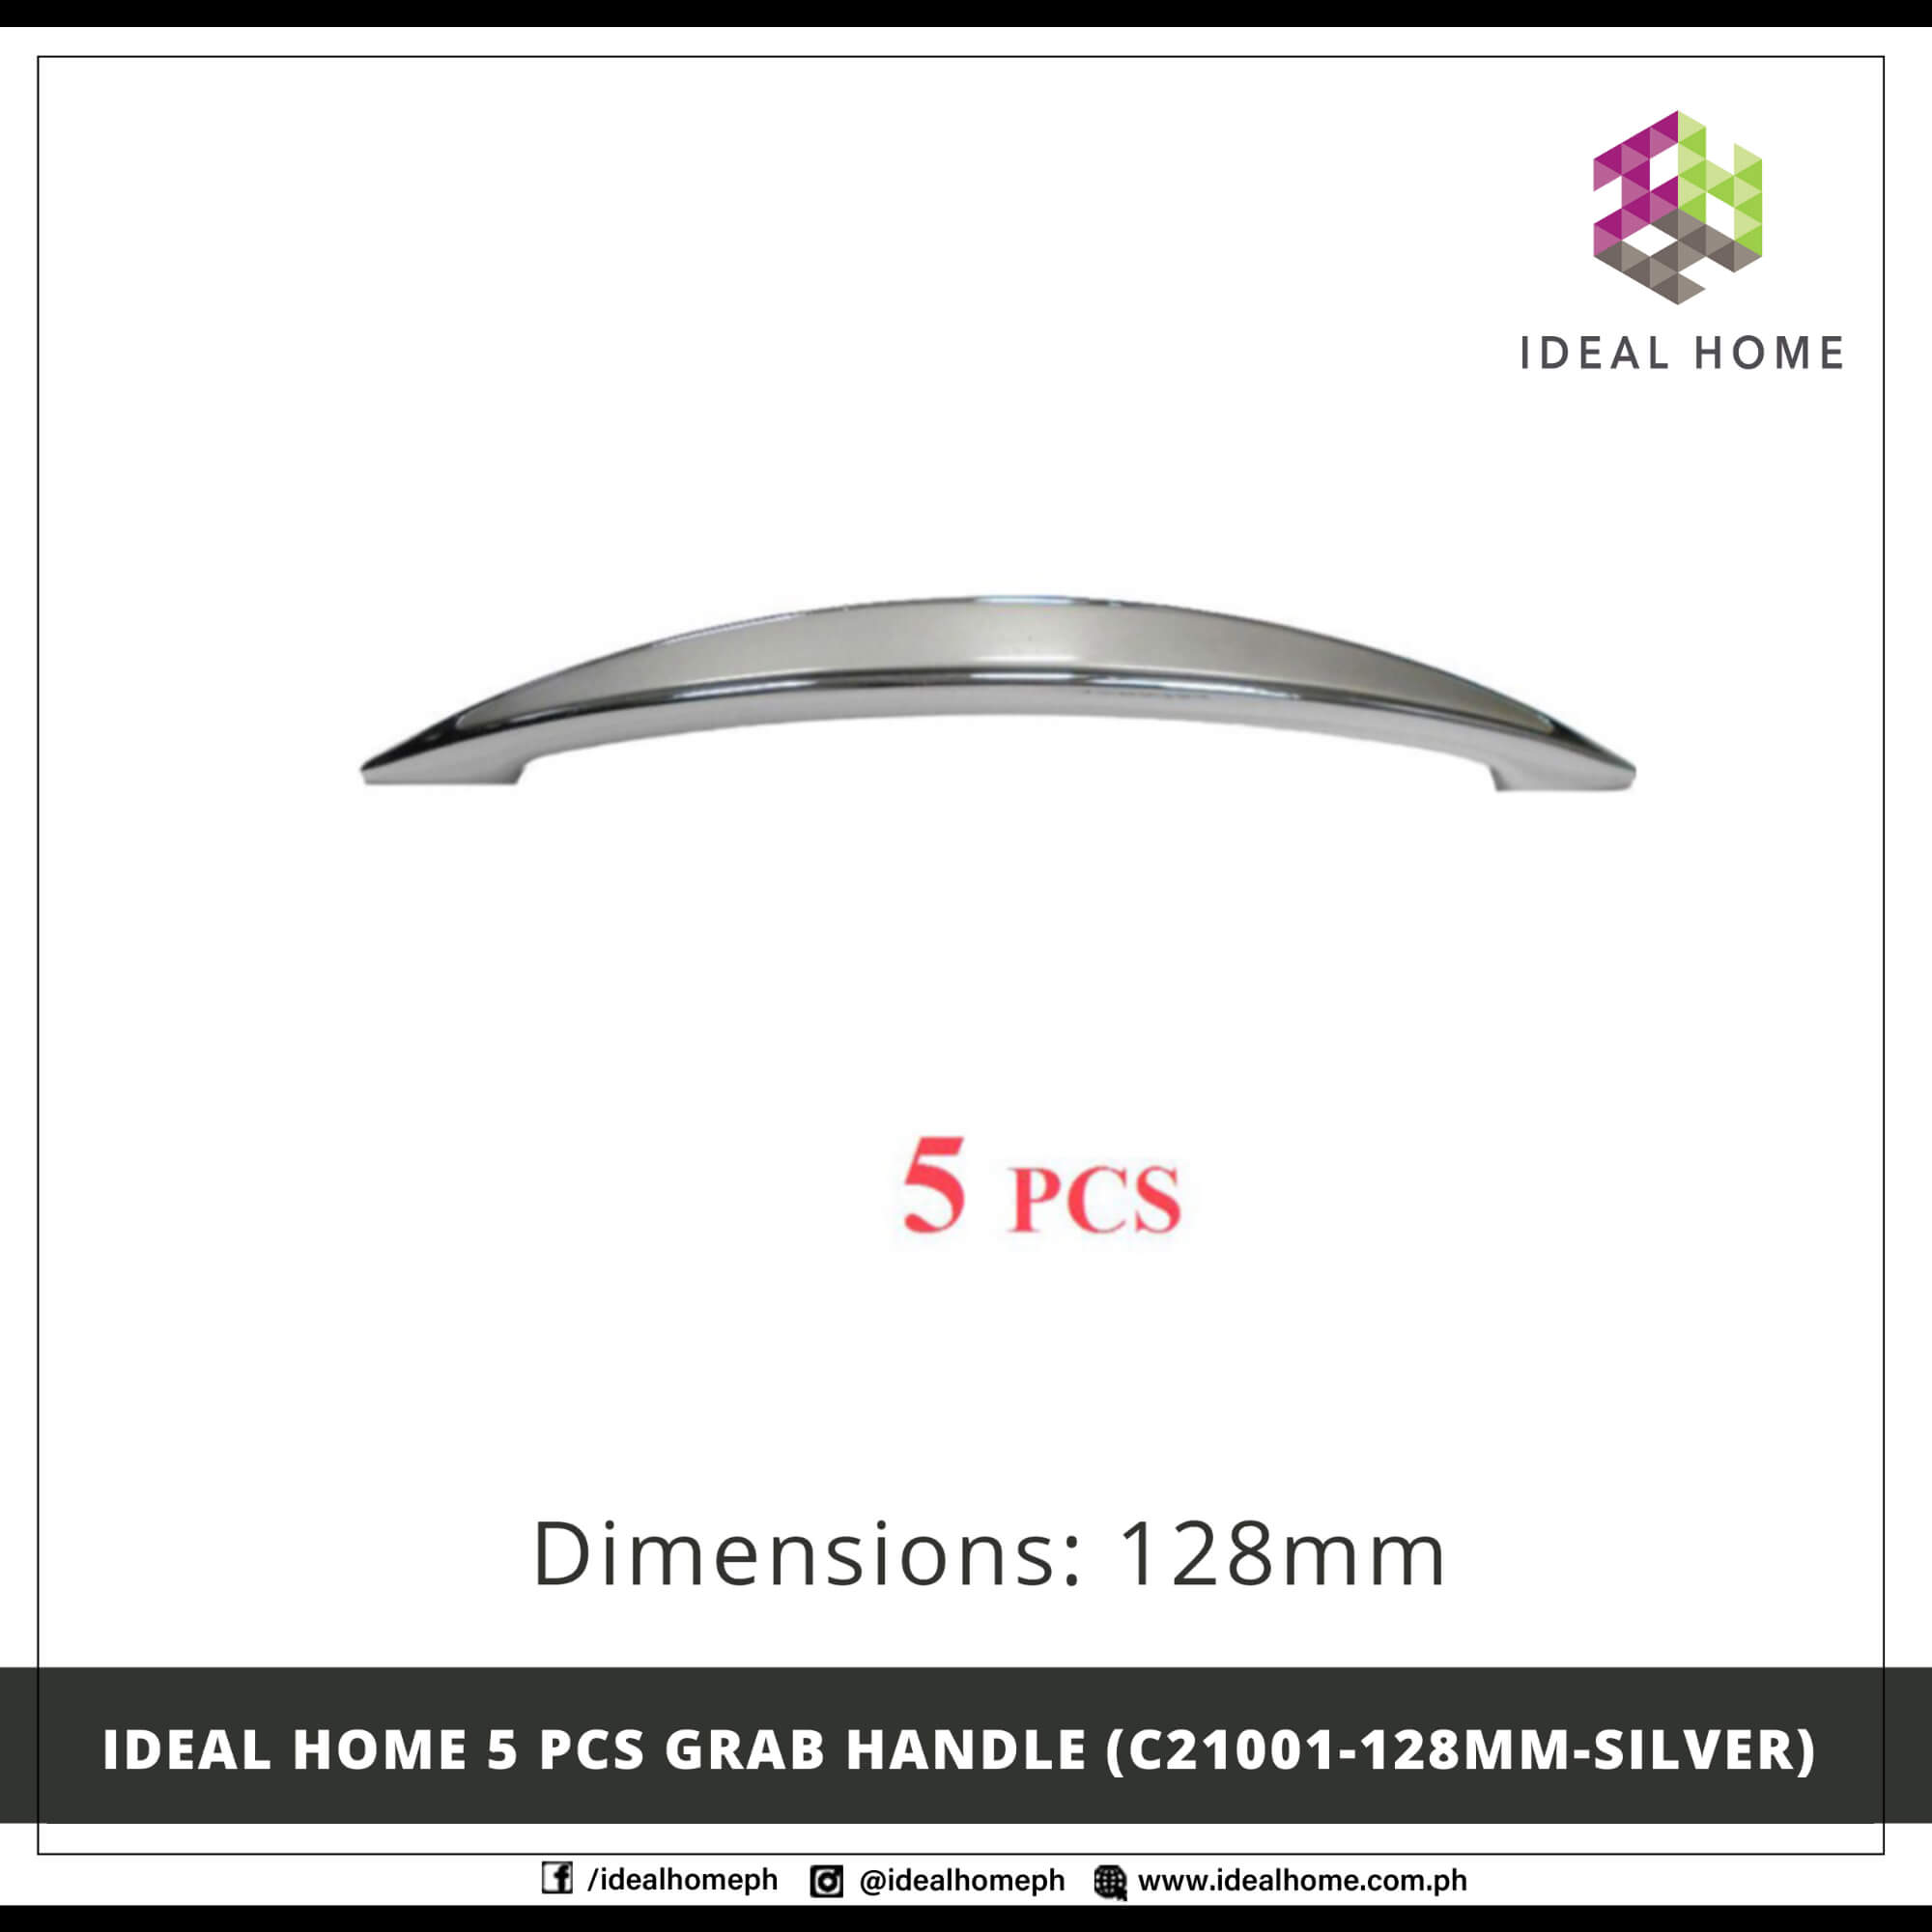 Ideal Home 5 PCS Grab Handle (C21001-128mm-SILVER)